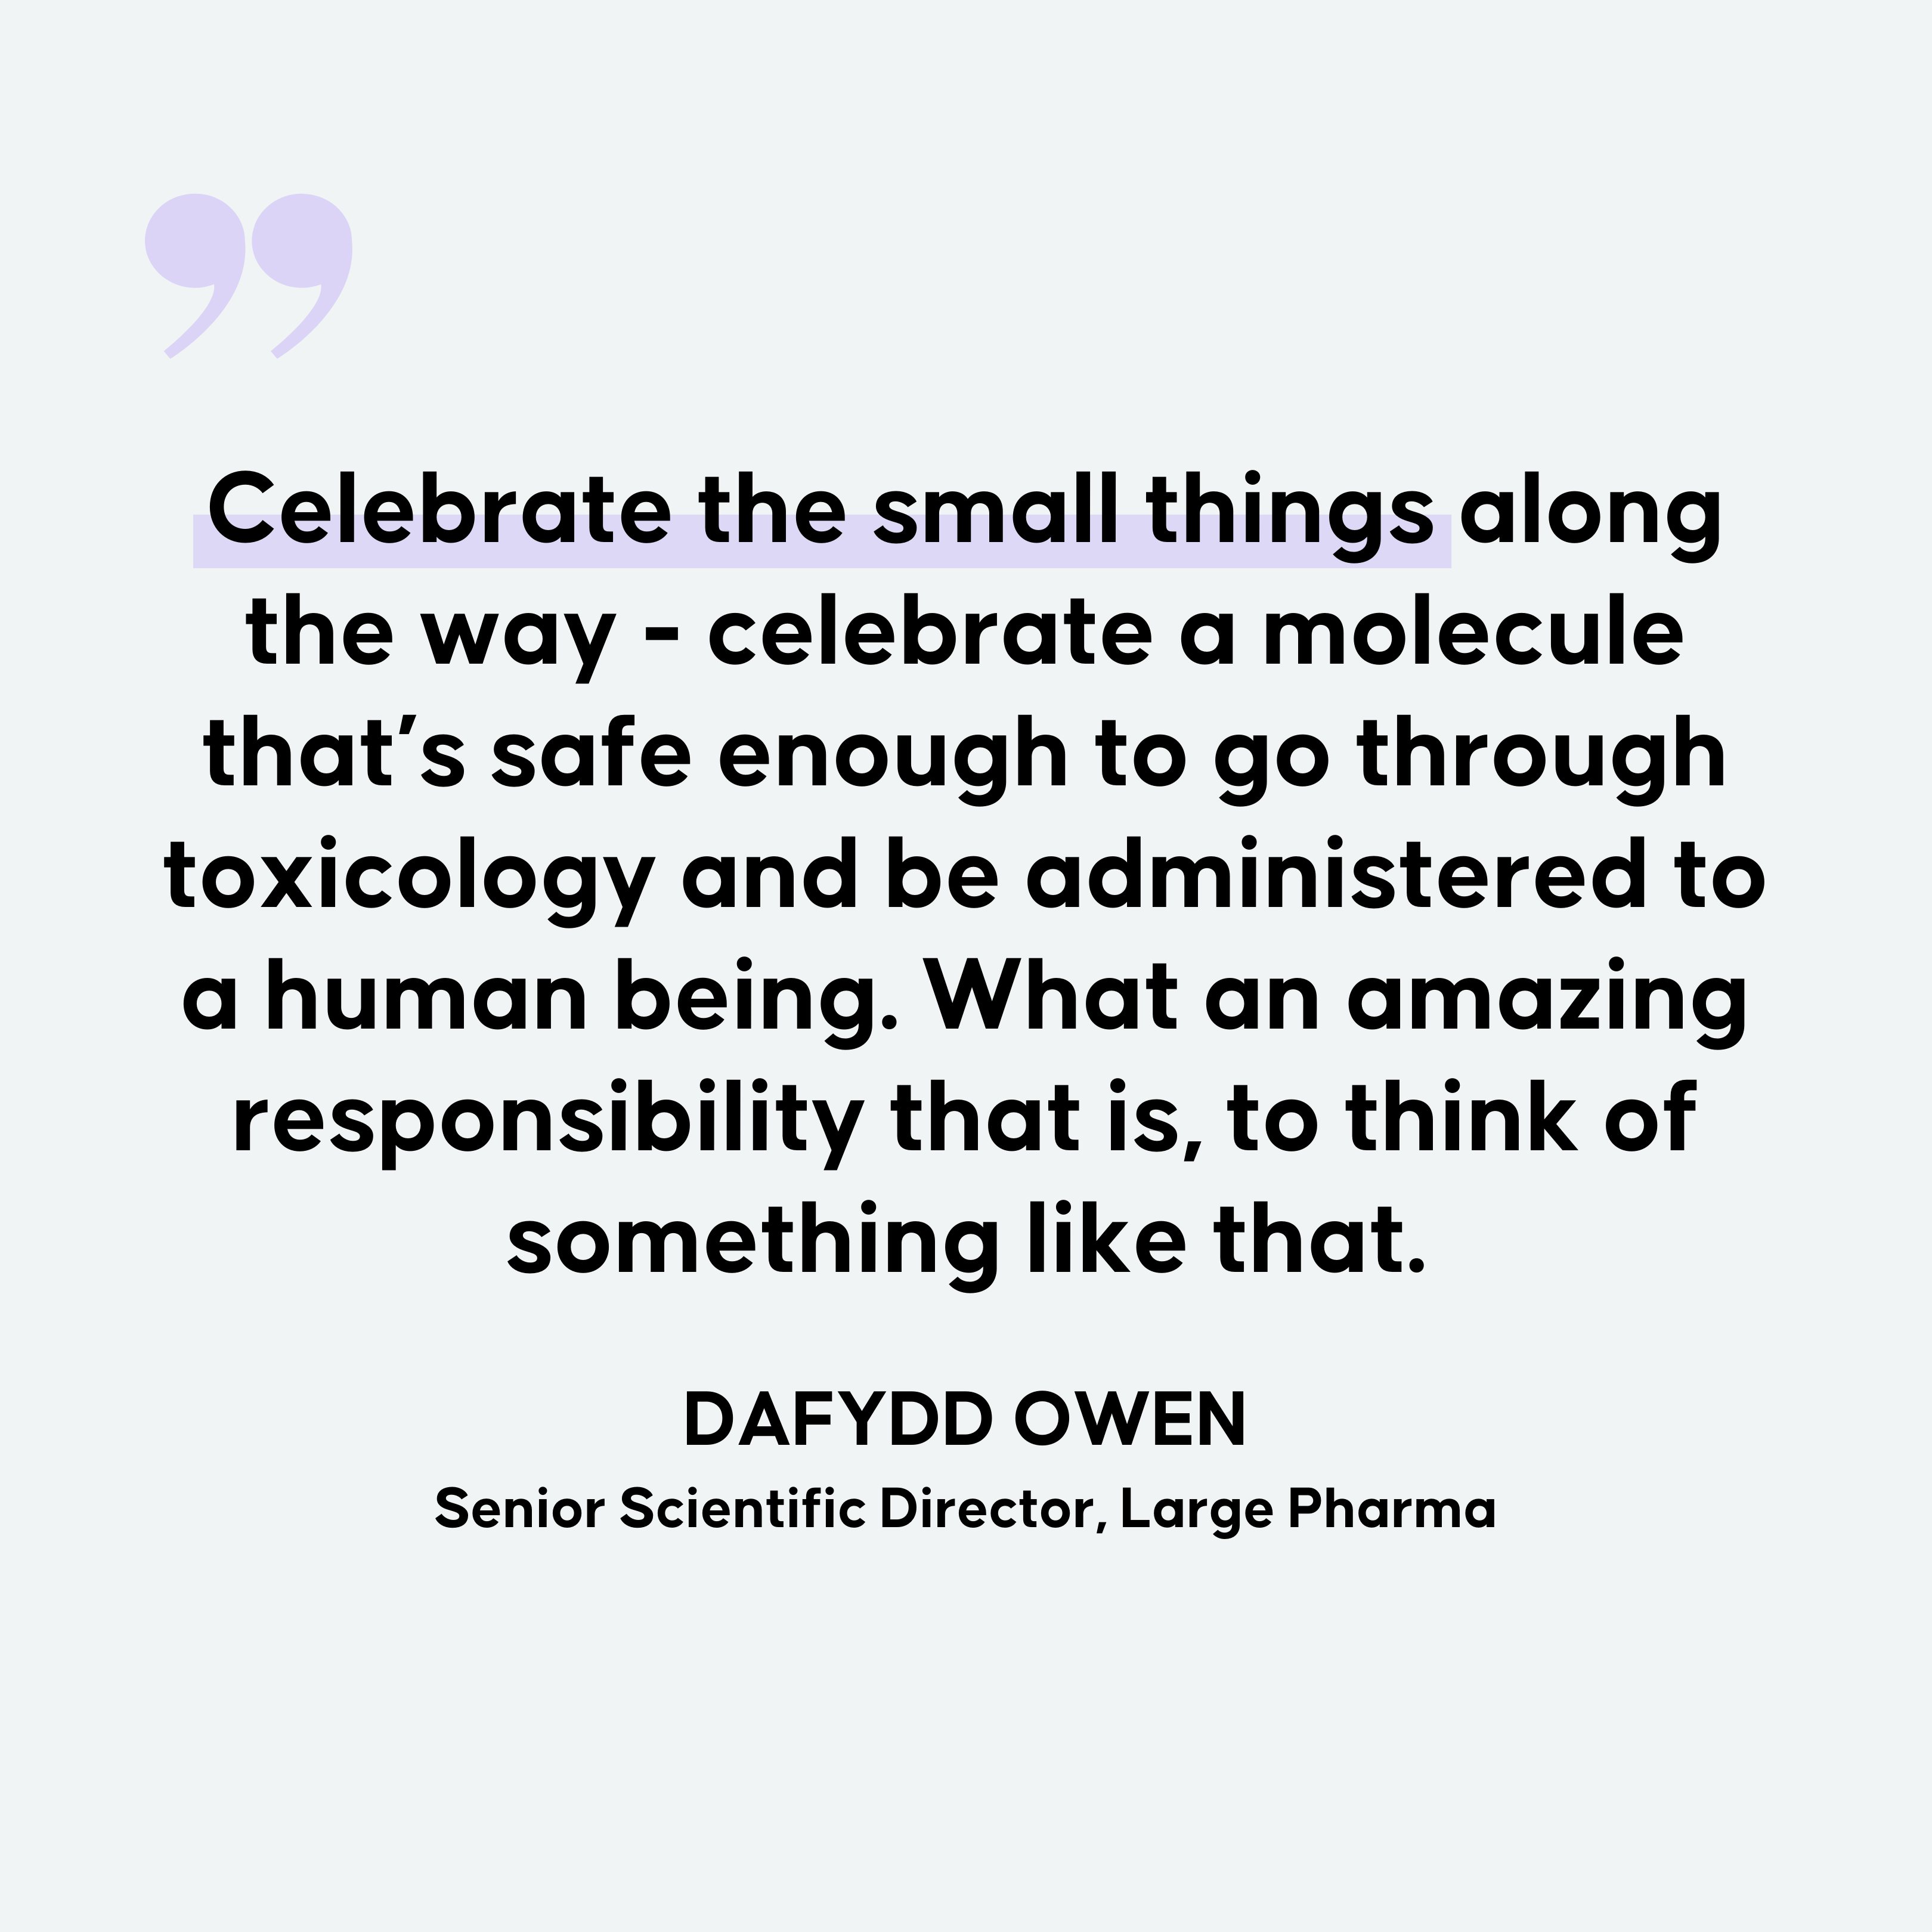 Dafydd Owen Quote - Senior Scientific Director for Large Pharma